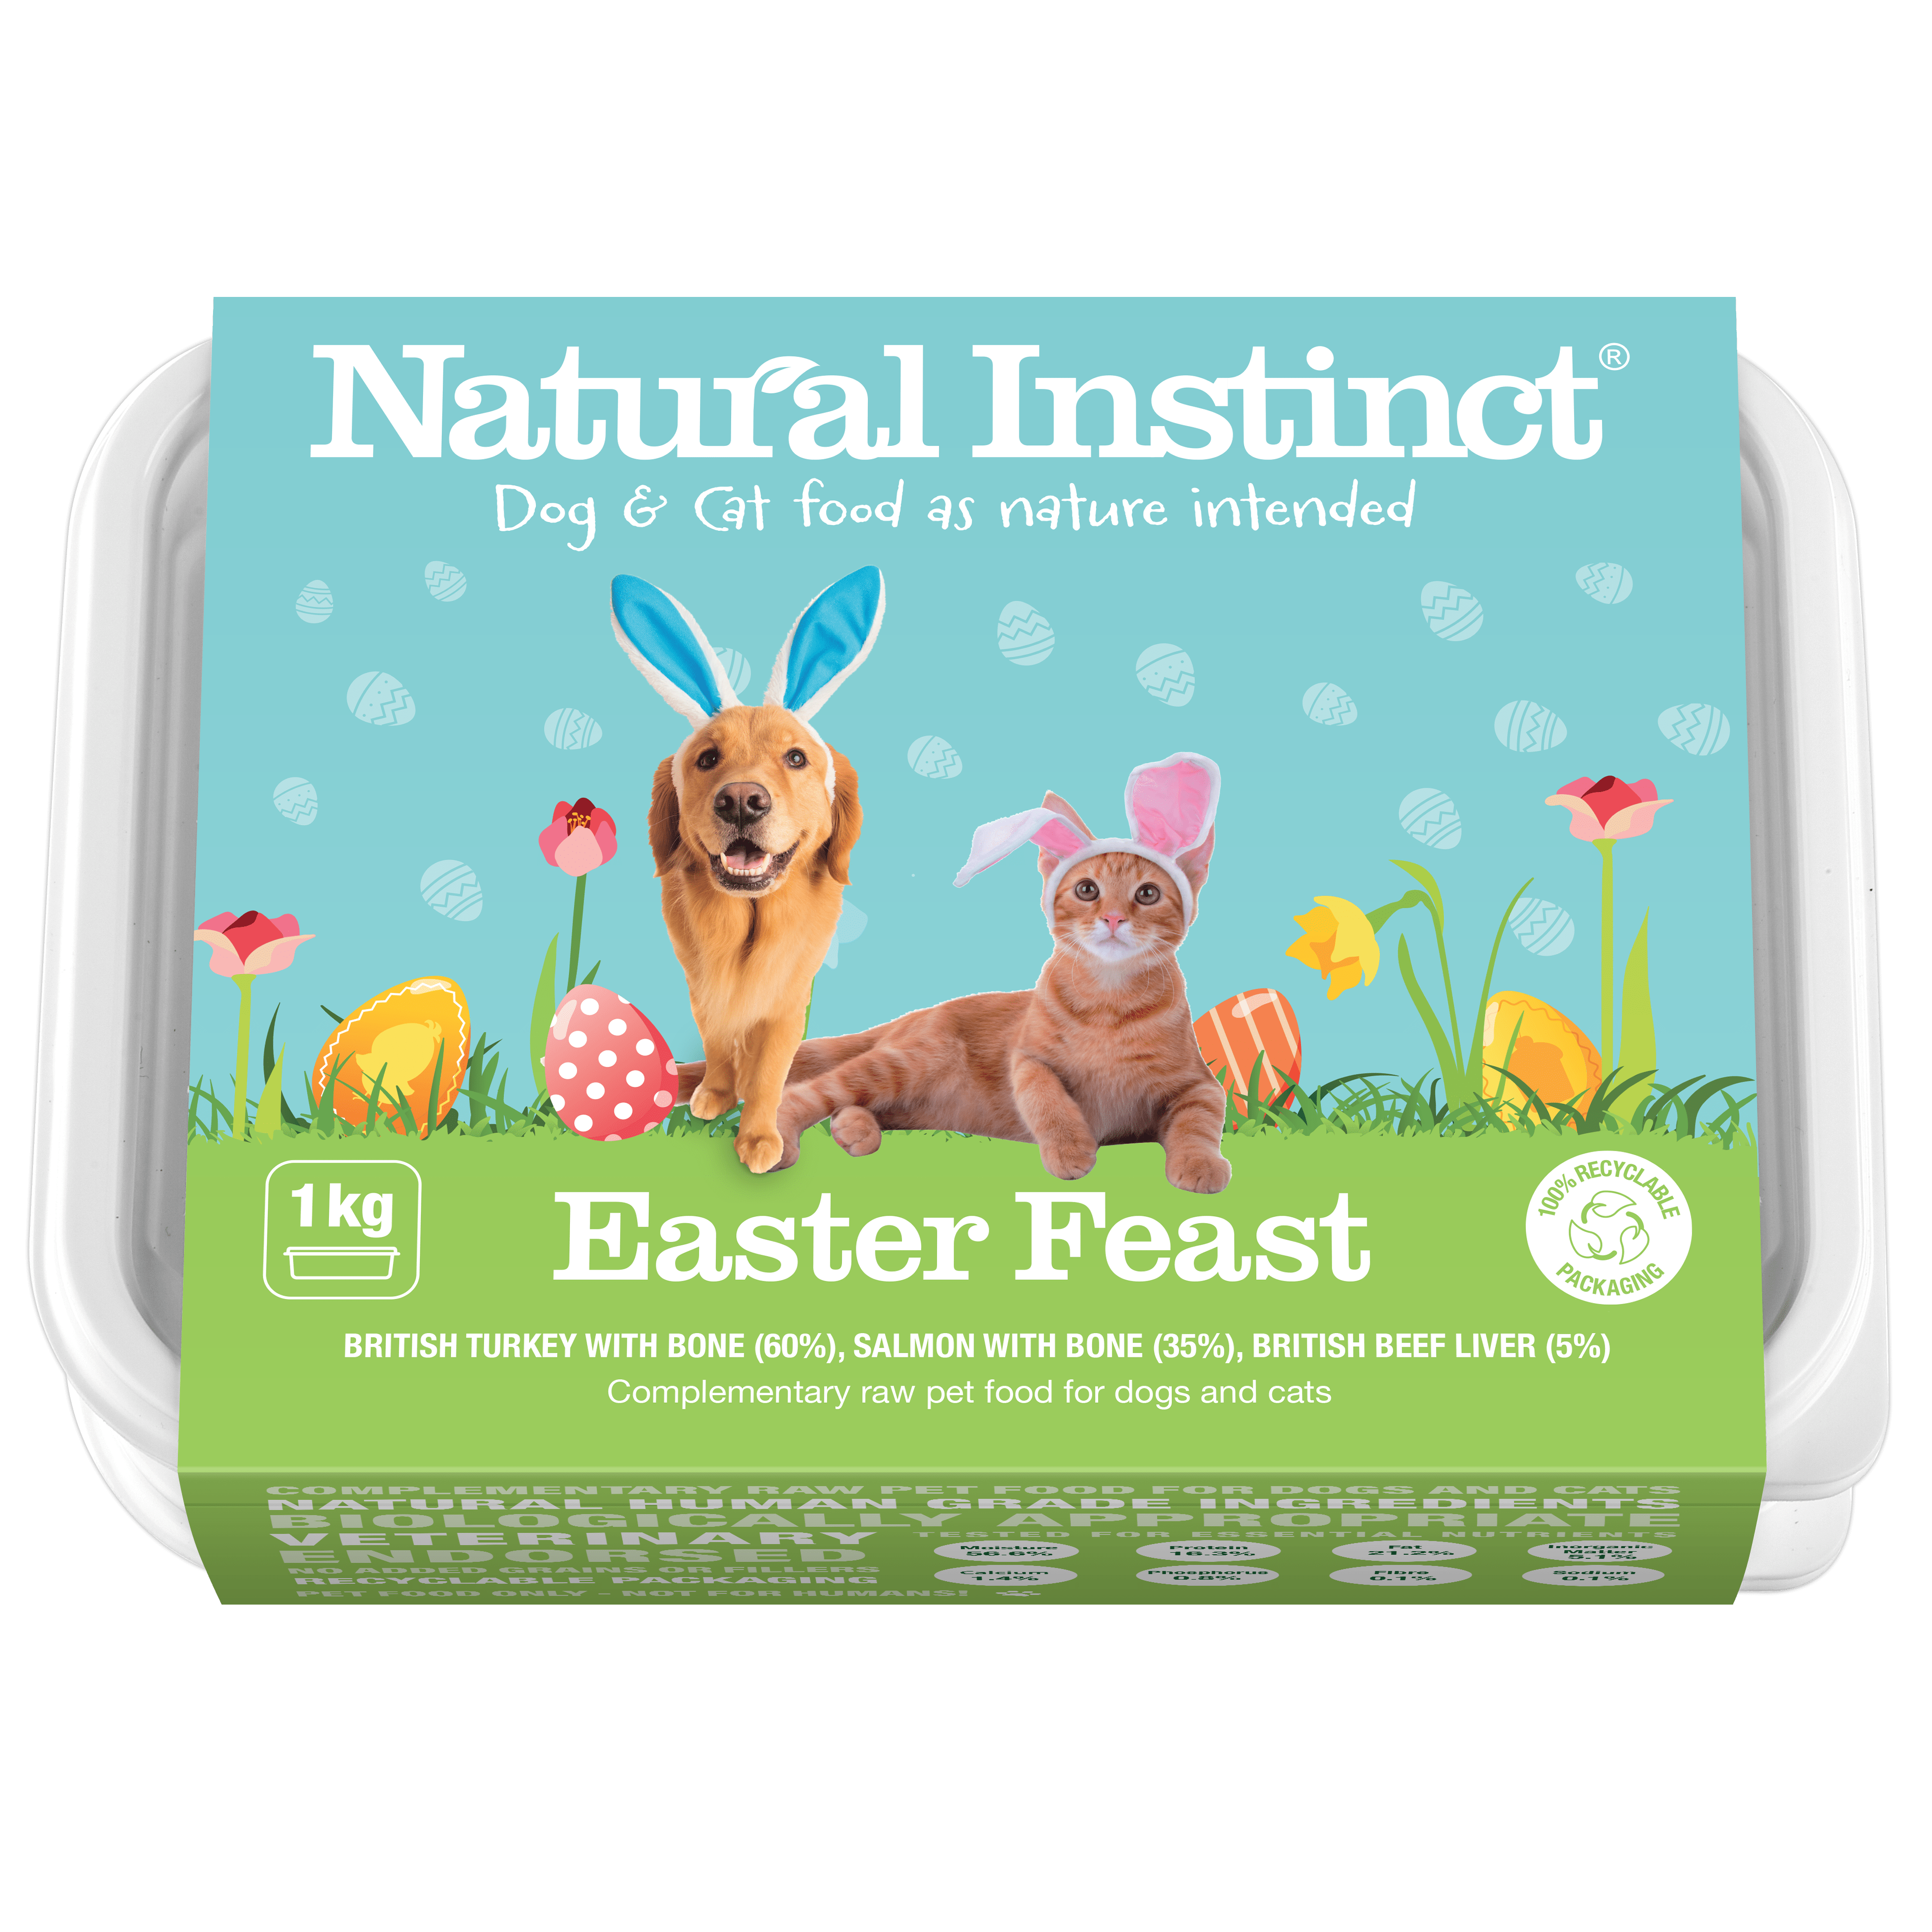 Natural Instinct Limited Edition Natural Instinct Easter Feast